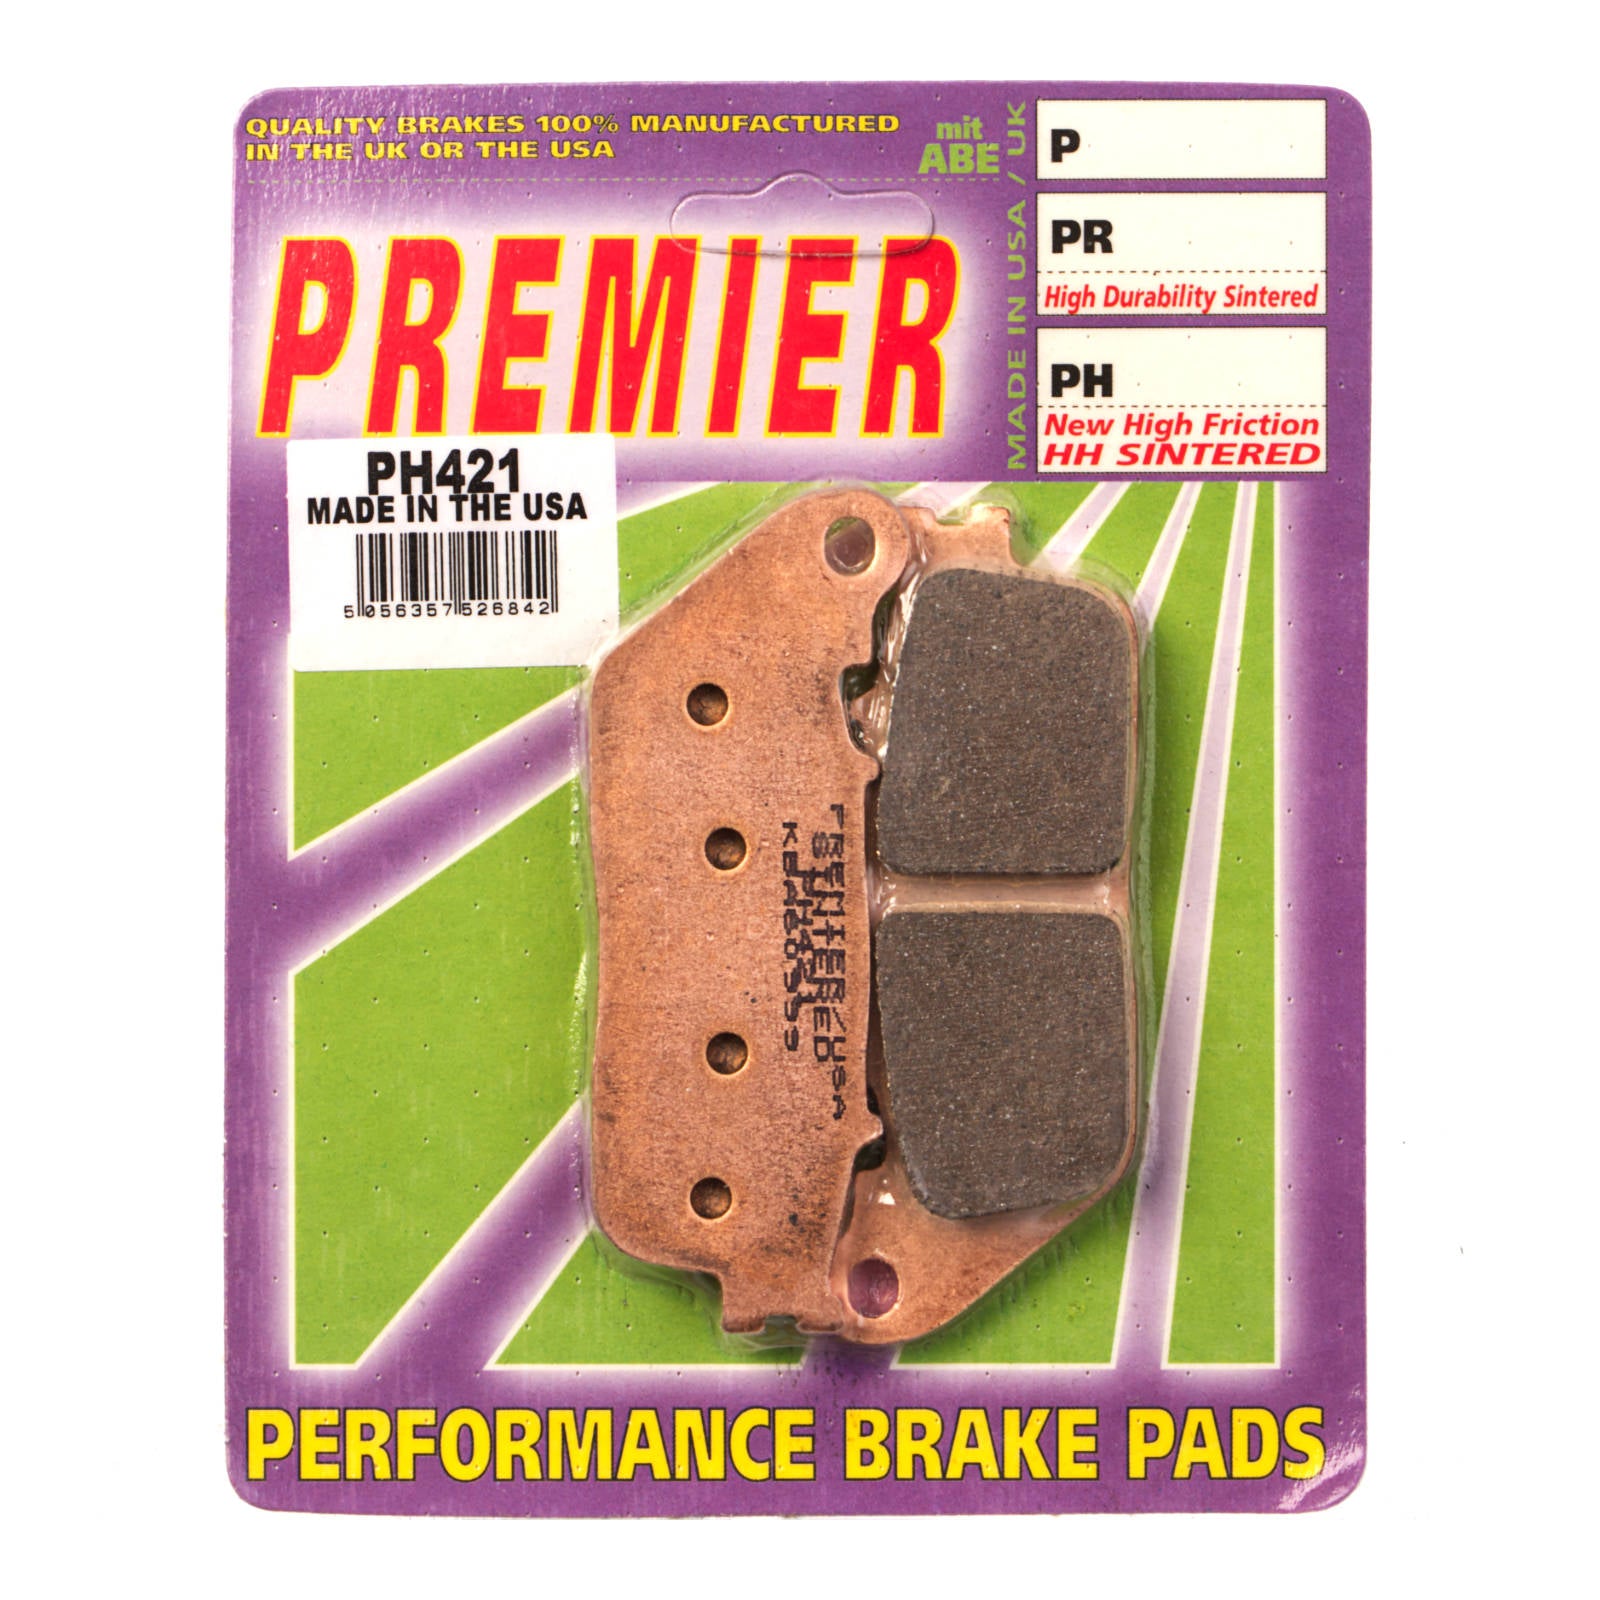 New PREMIER Brake Pad - PH Street Sintered (GF277S3) #PBPH421